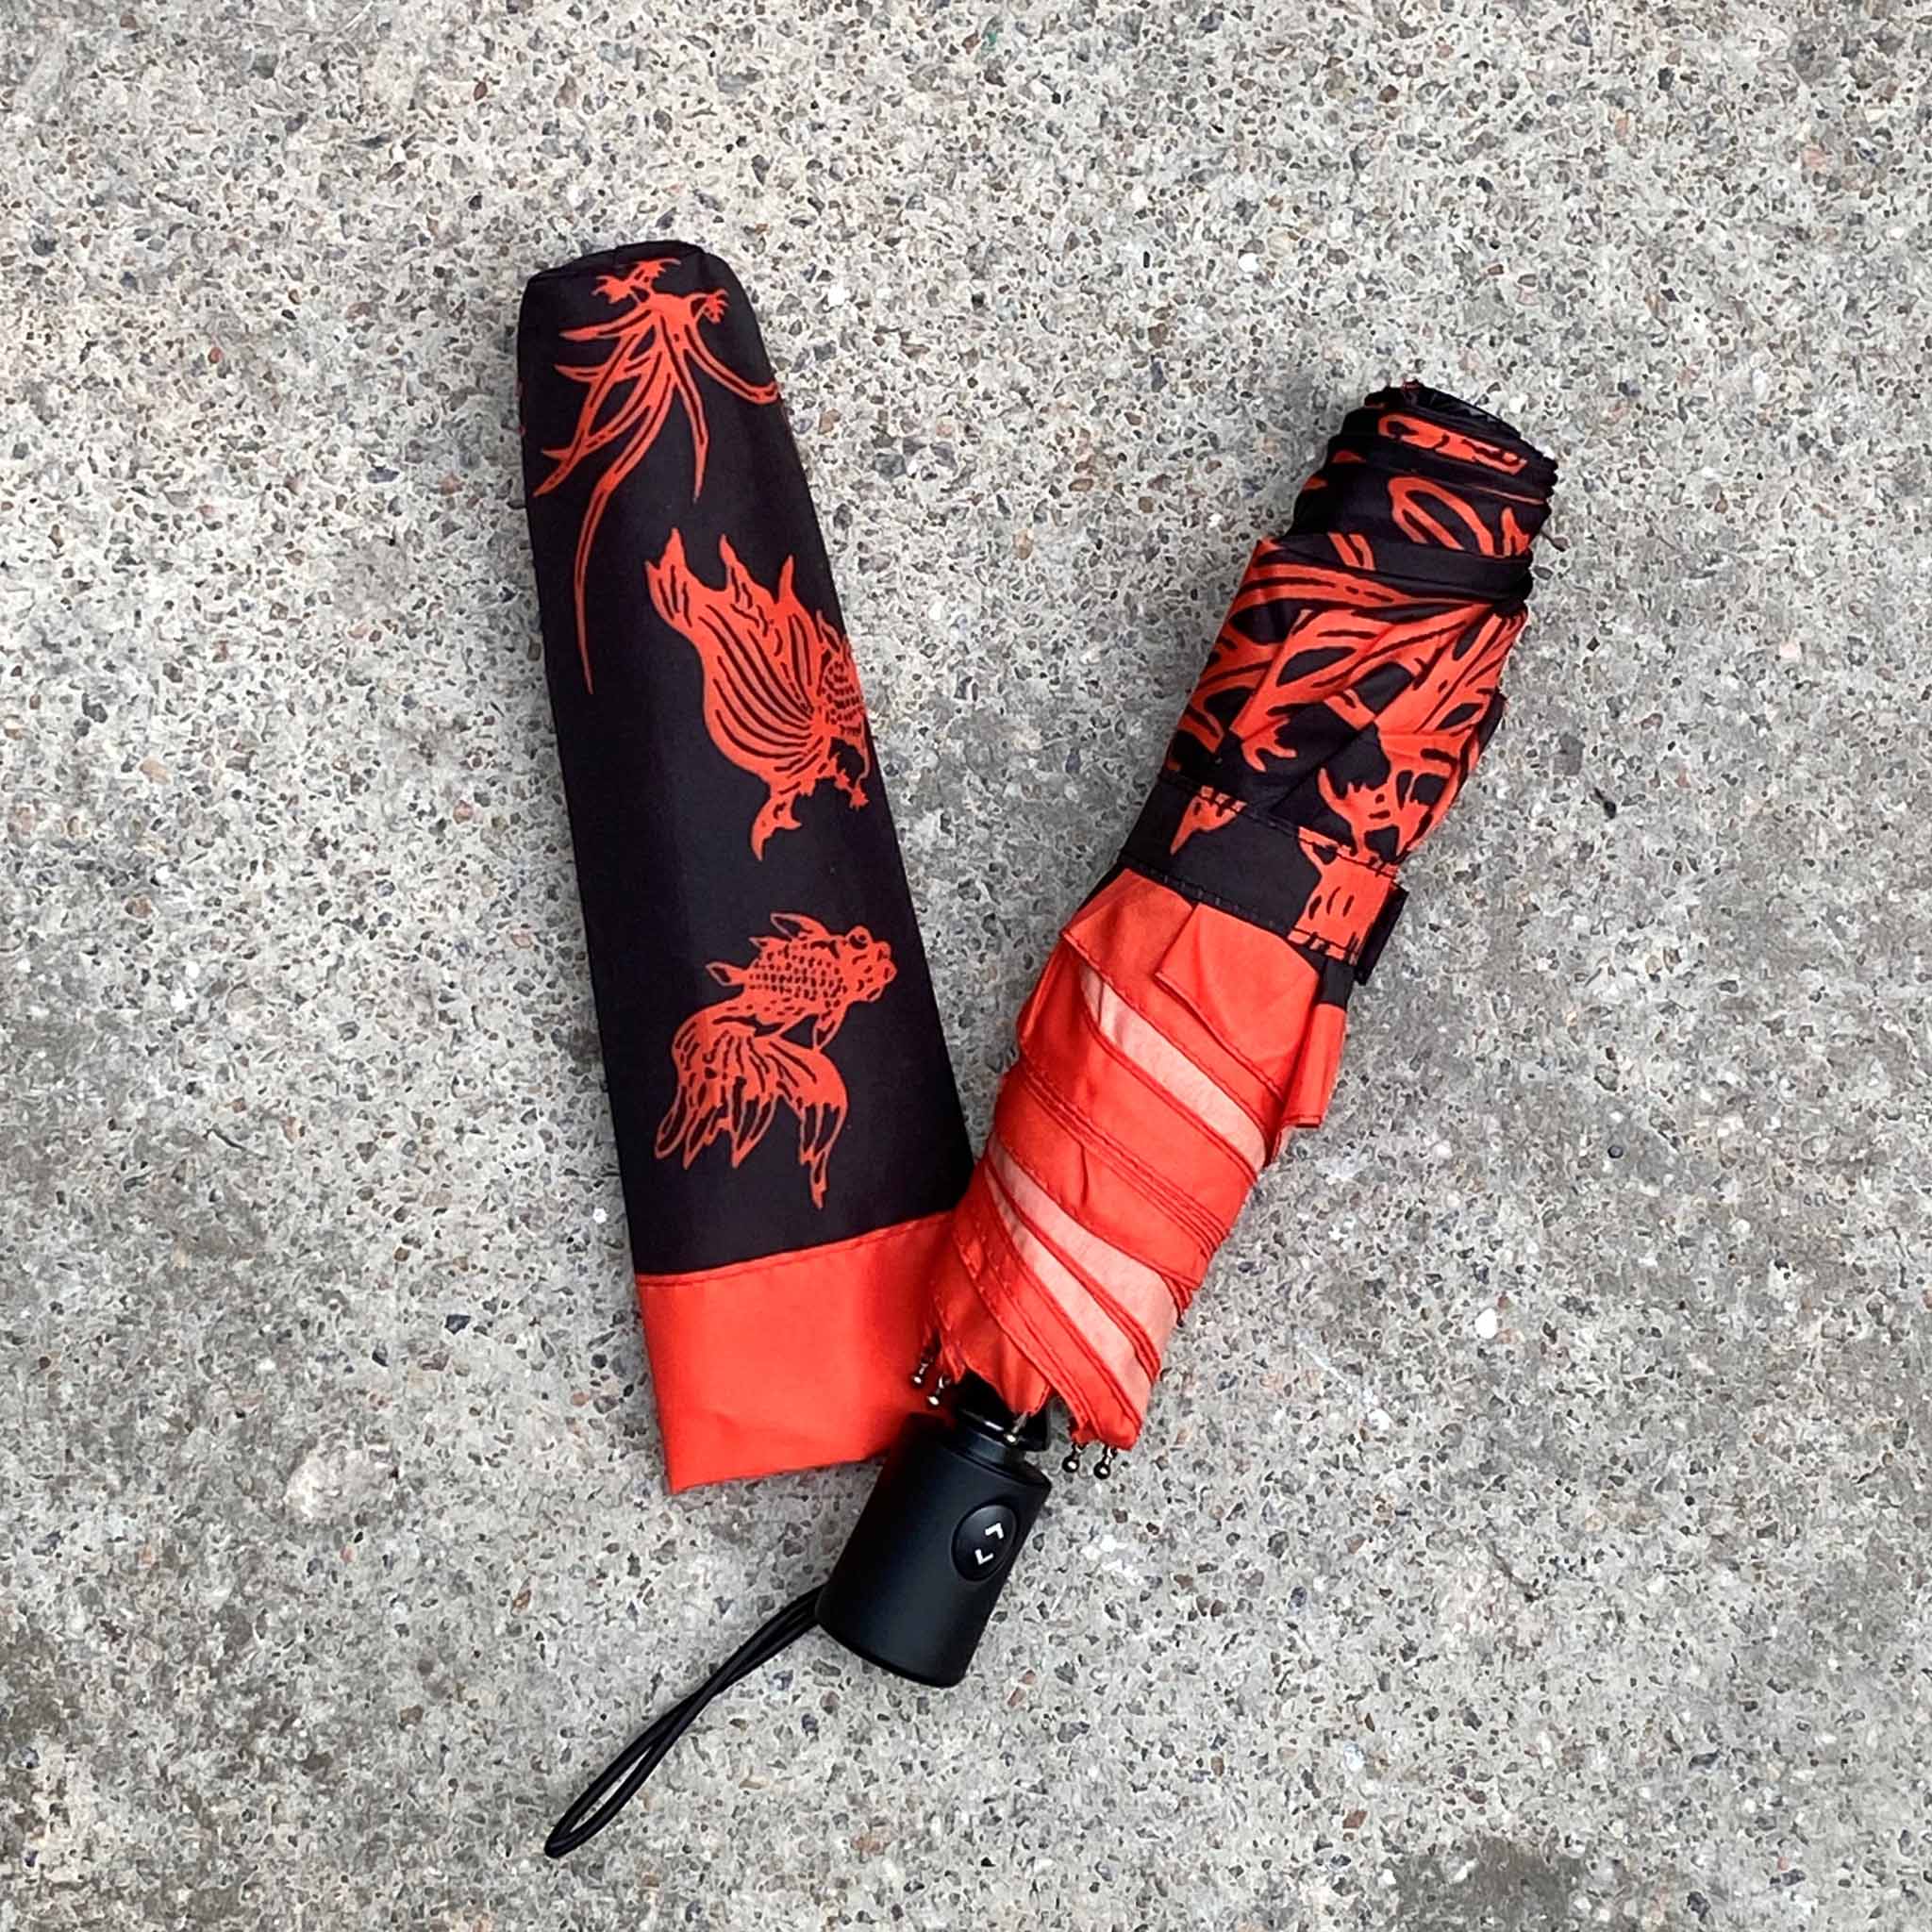 Goldfish Papercut Teflon™ Quick Dry Umbrella